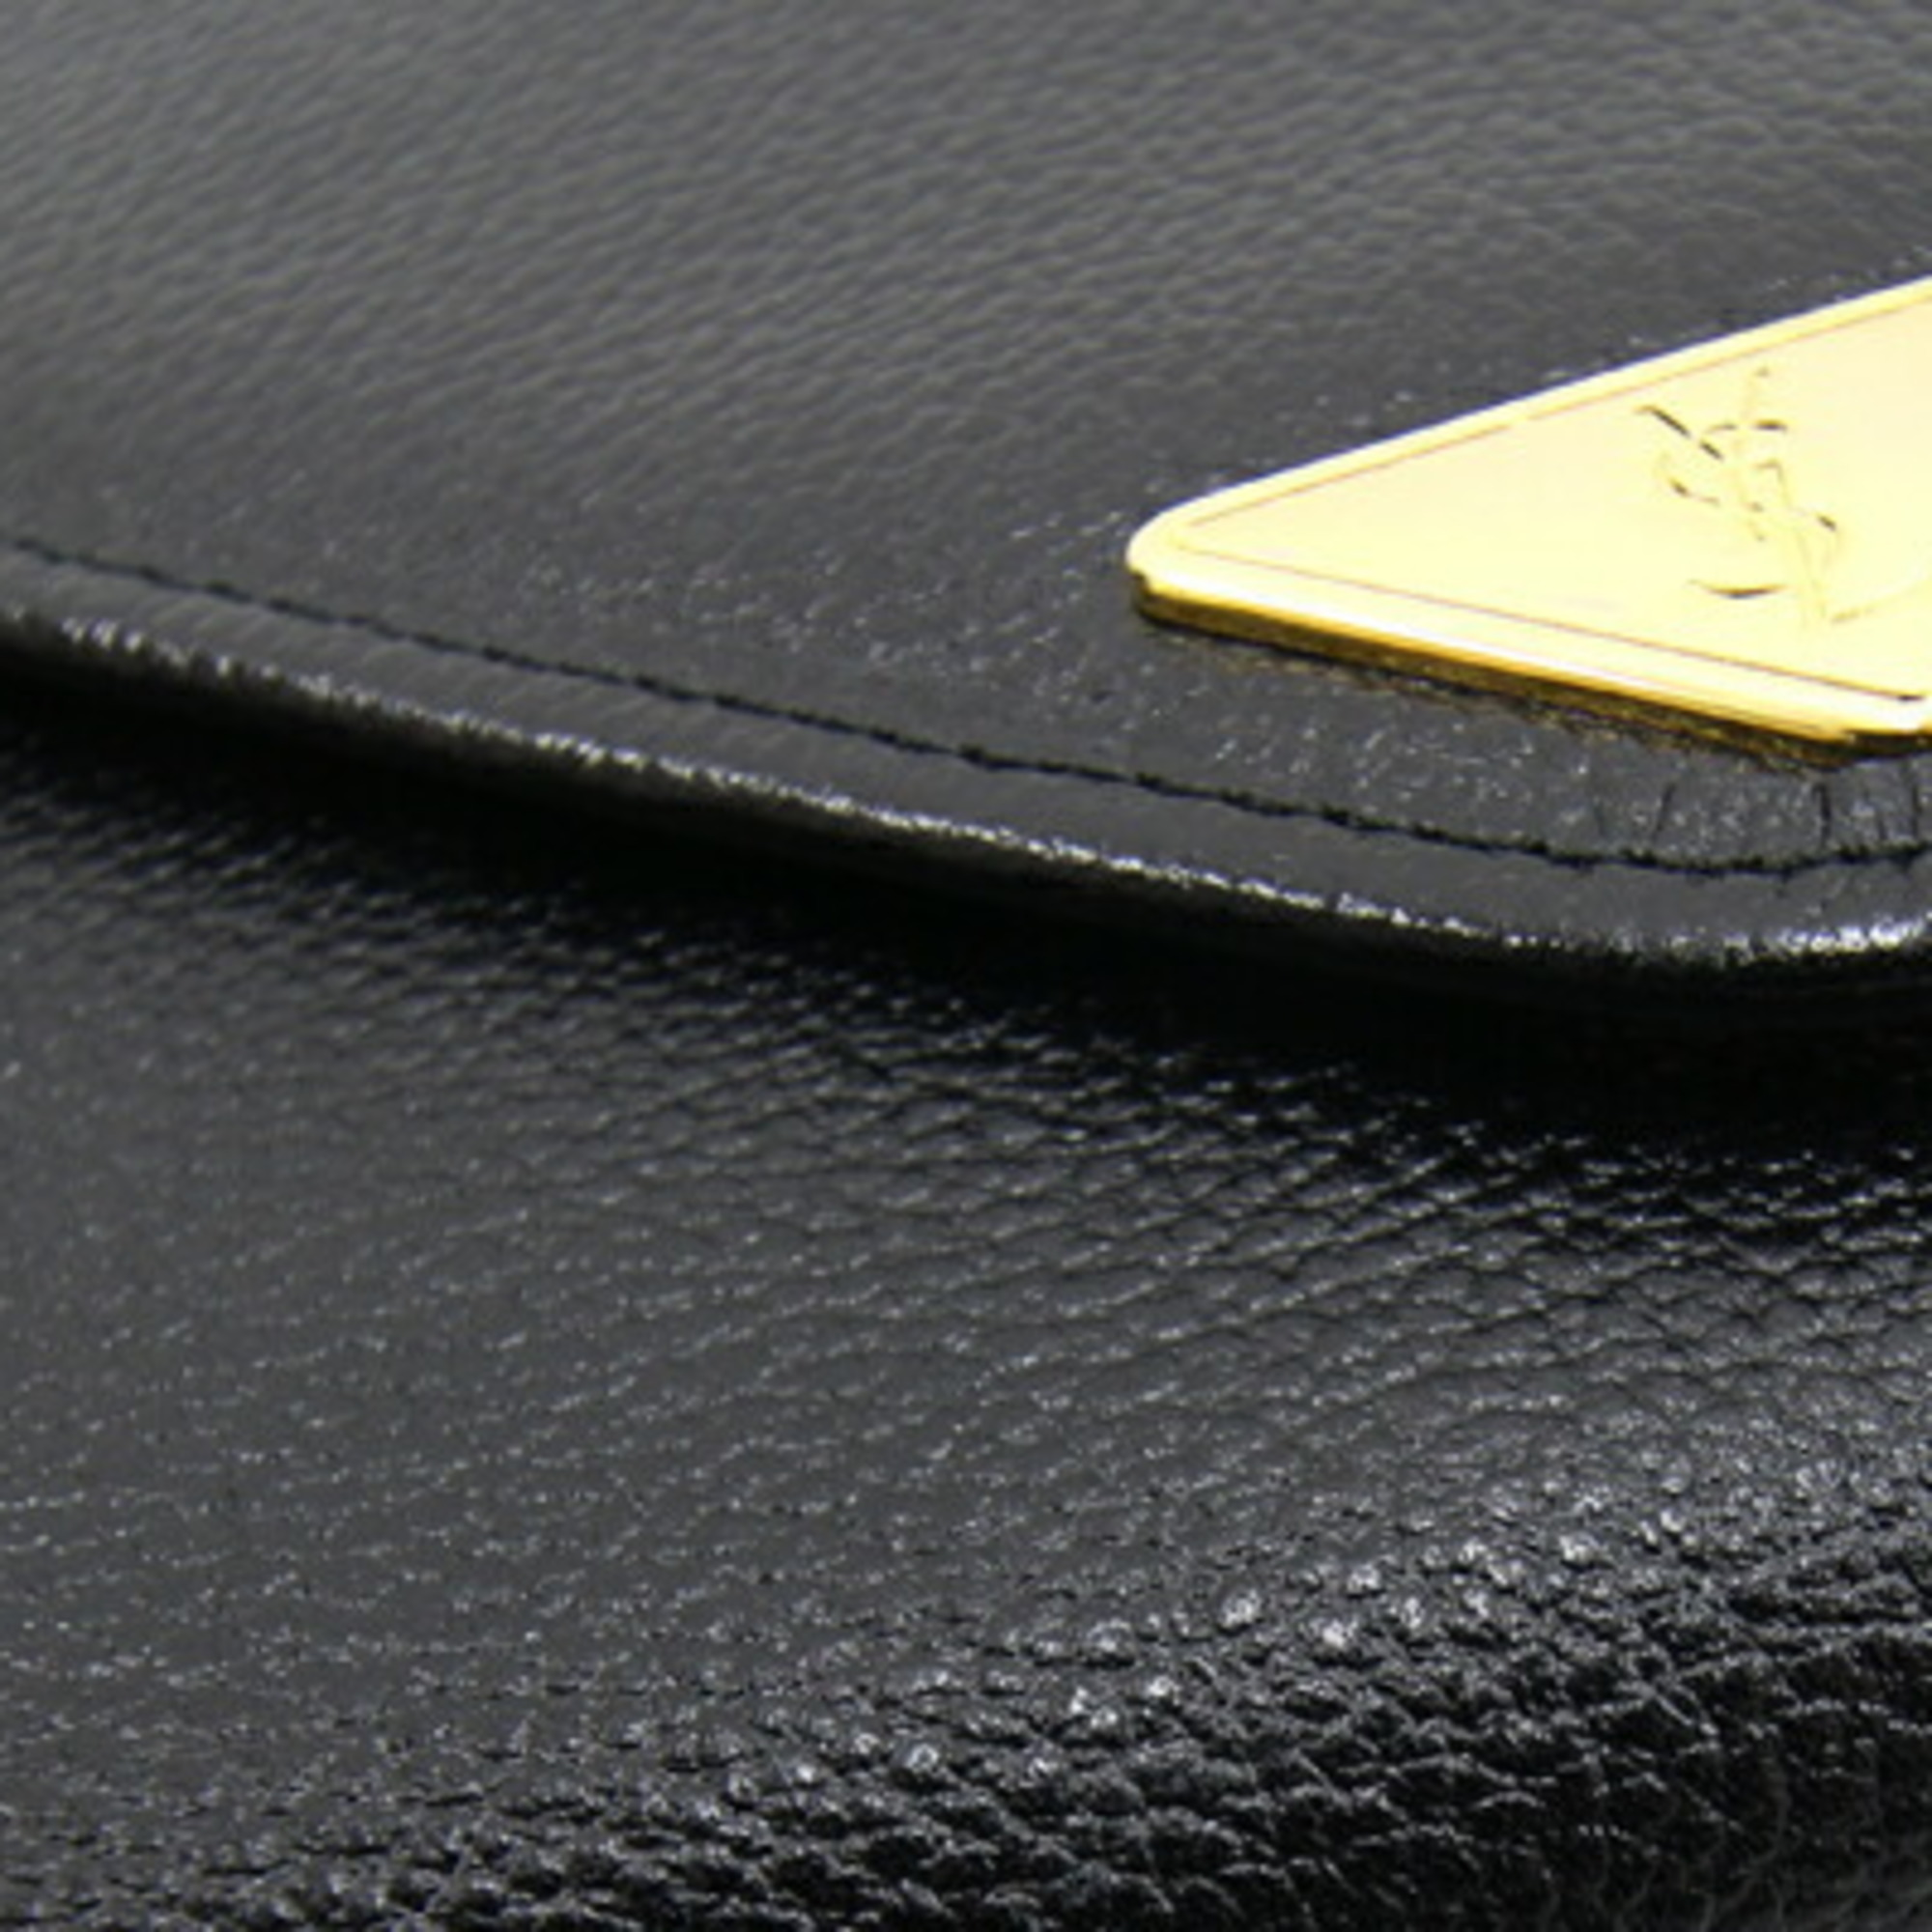 Yves Saint Laurent shoulder bag, black leather, black, women's, YSL, Laurent, old classic, retro,